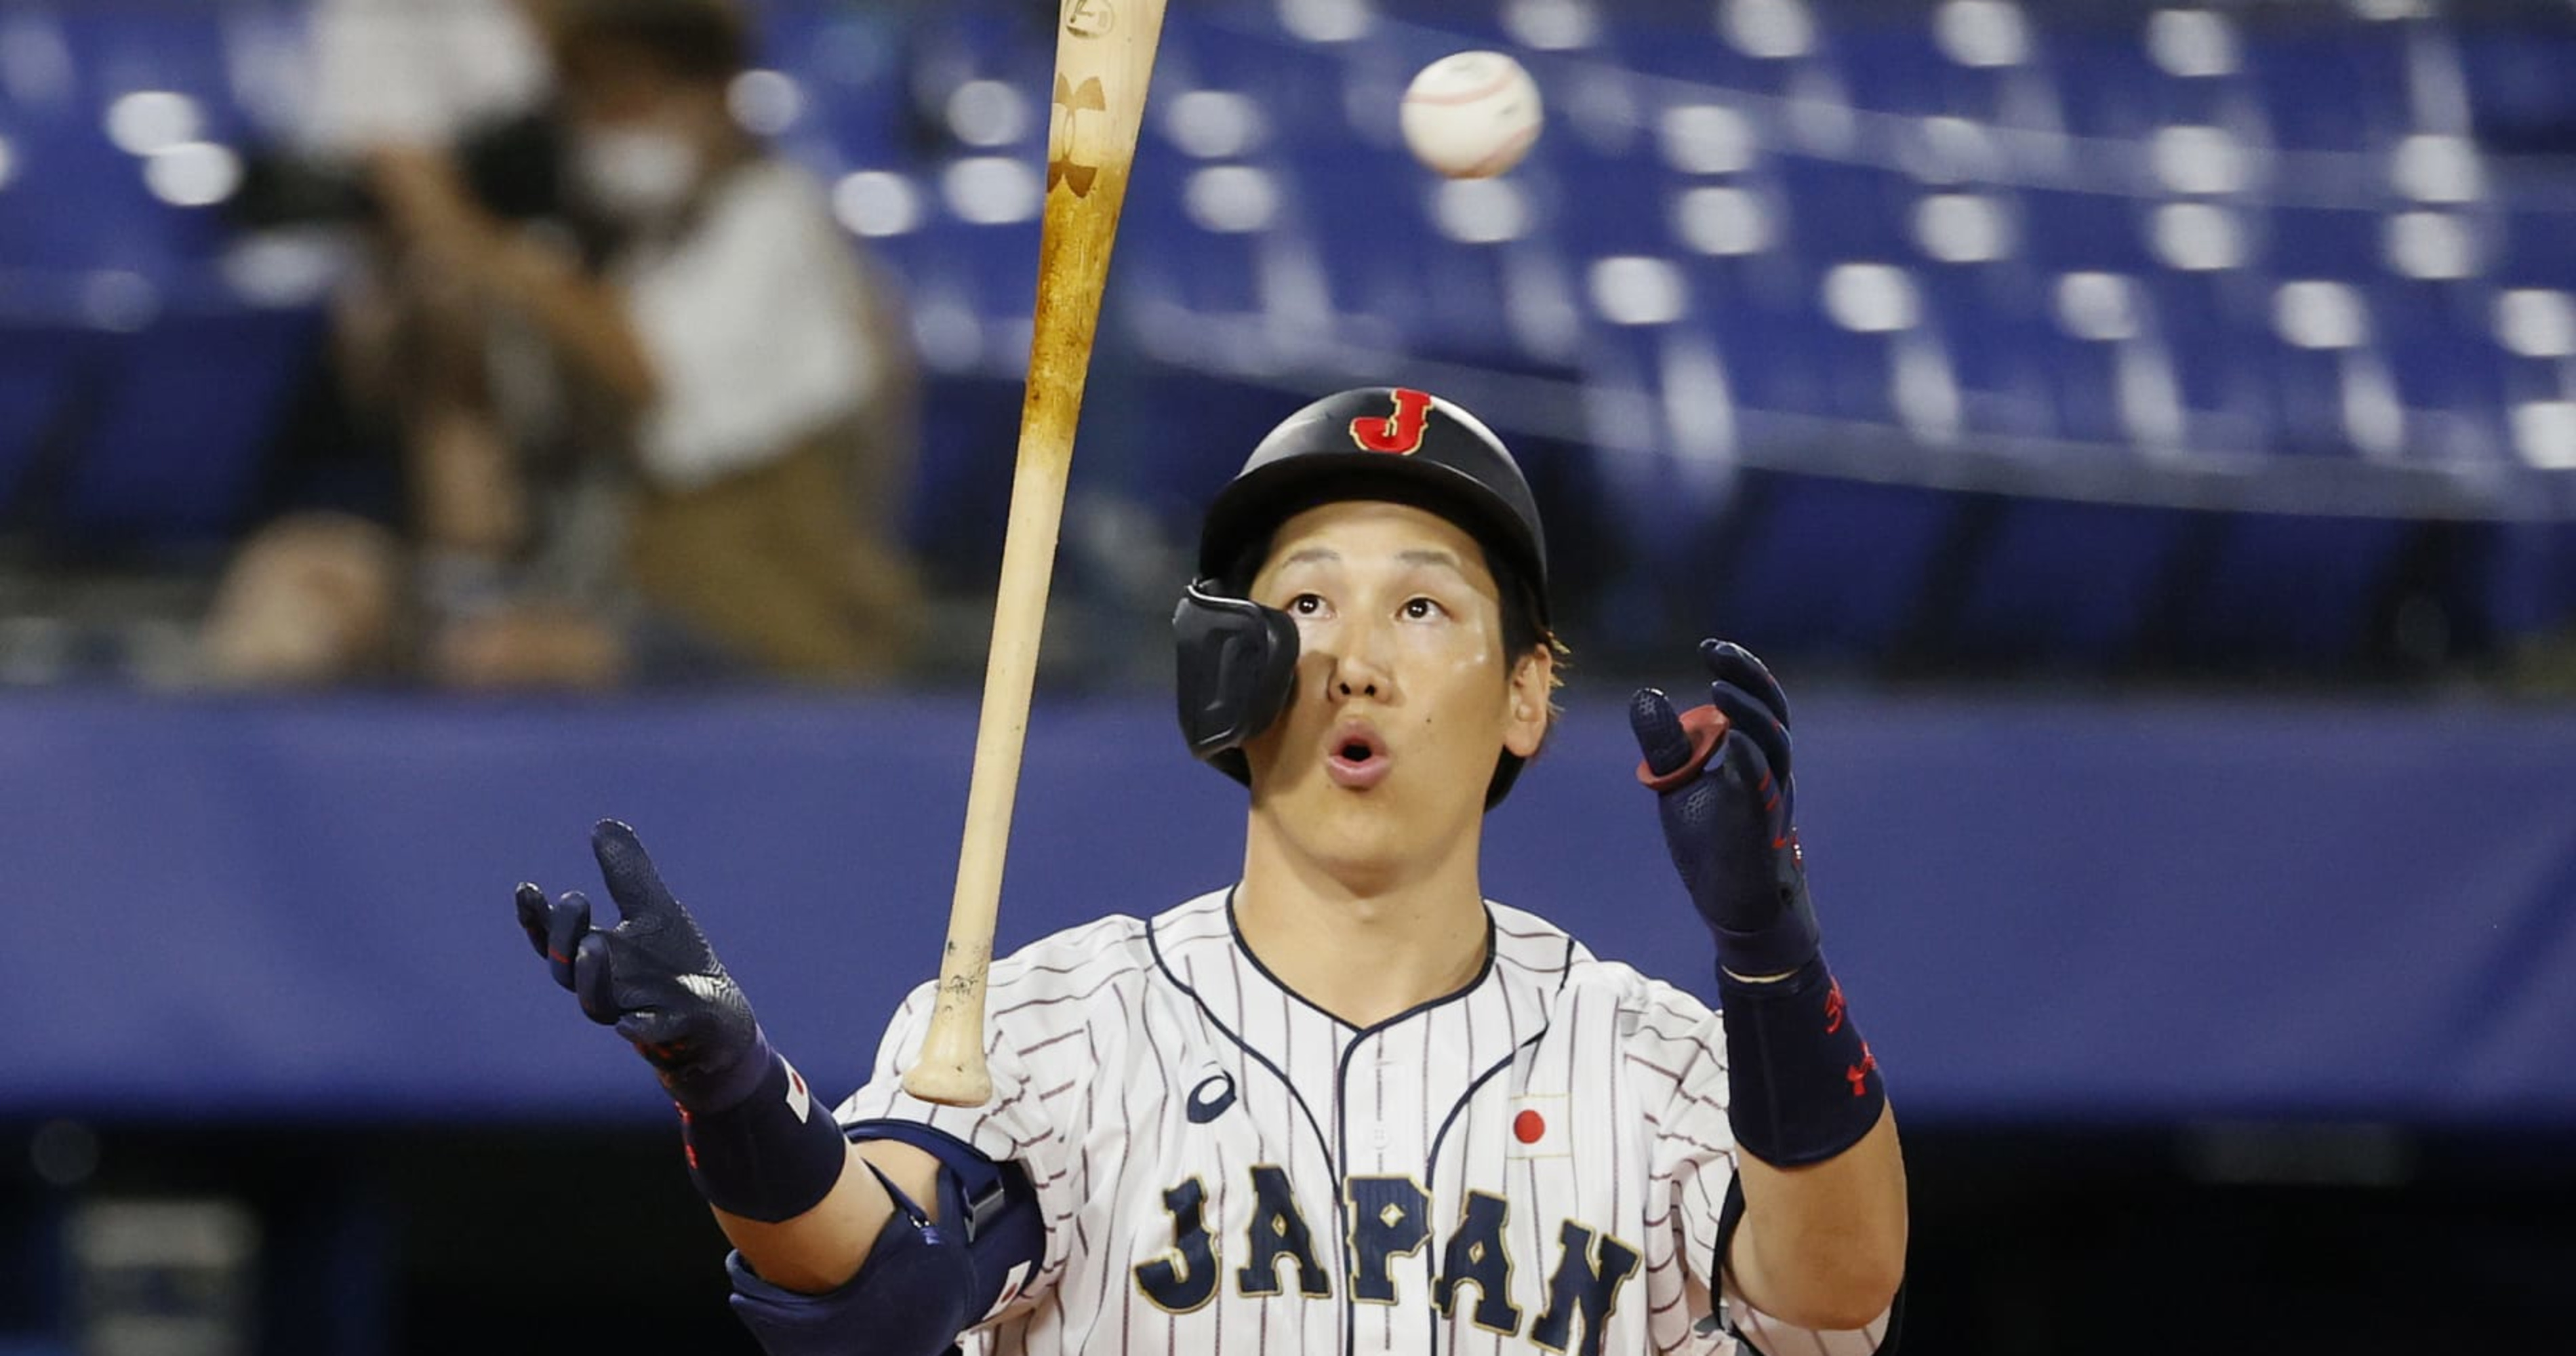 Baseball: Masataka Yoshida gets 2 hits, RBI before injury scare